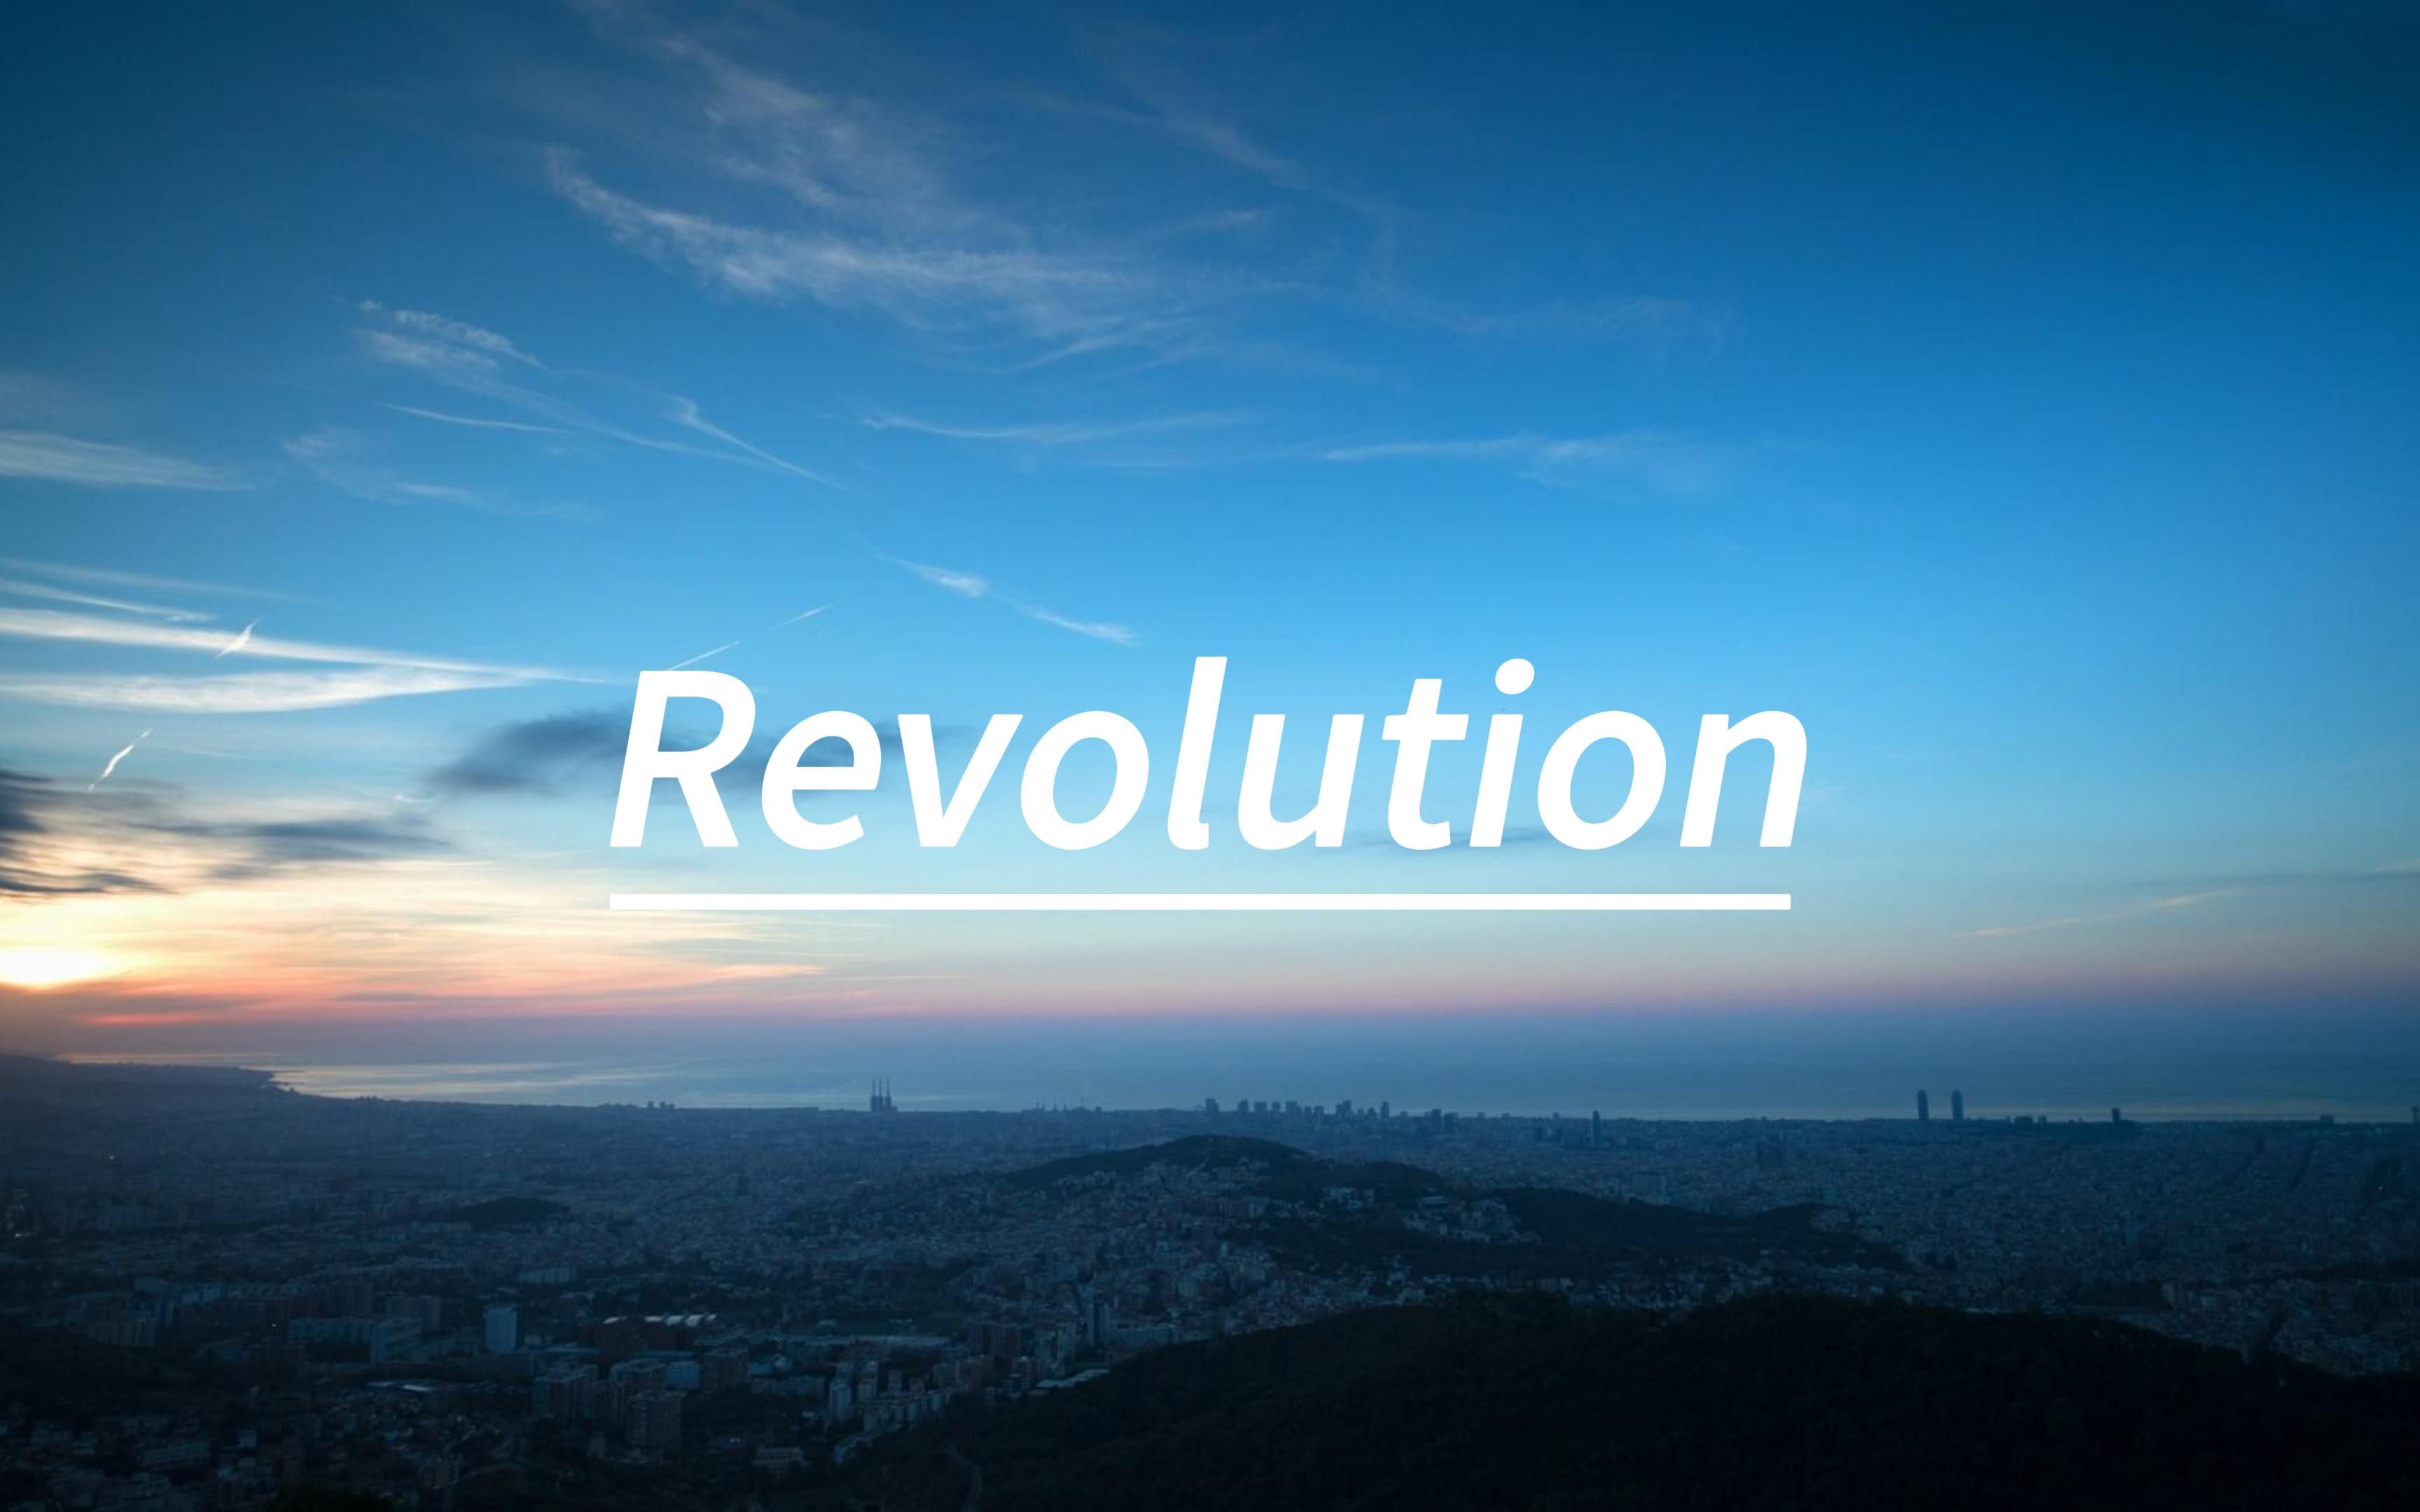 《Revolution》，“全力追逐，东山再起”